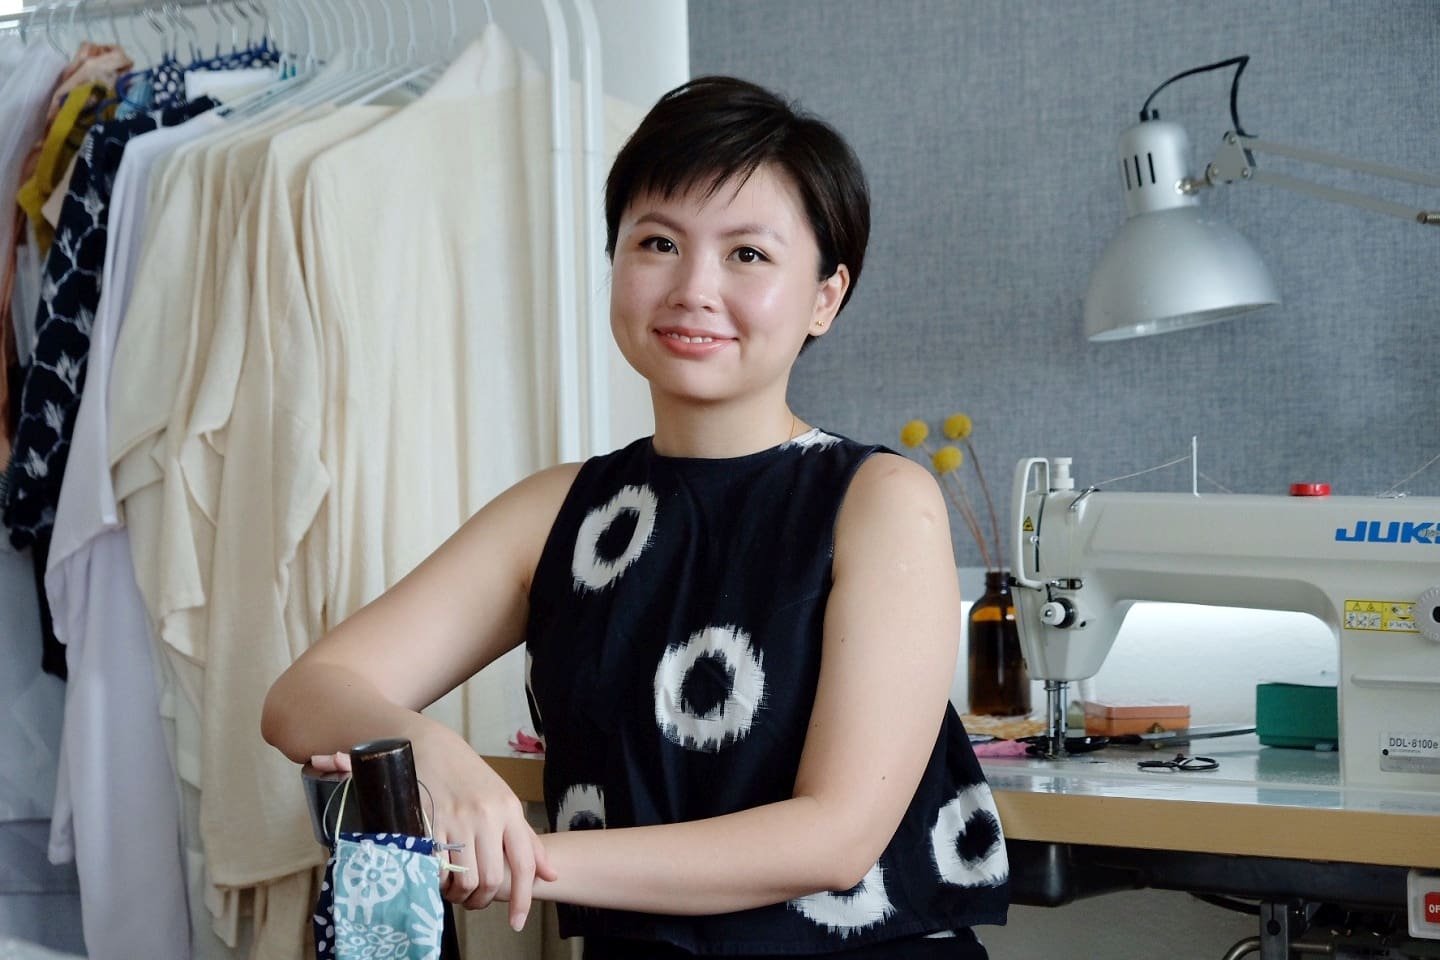 Zero-waste fashion brand Little creates minimalist clothing without excess fabric scraps